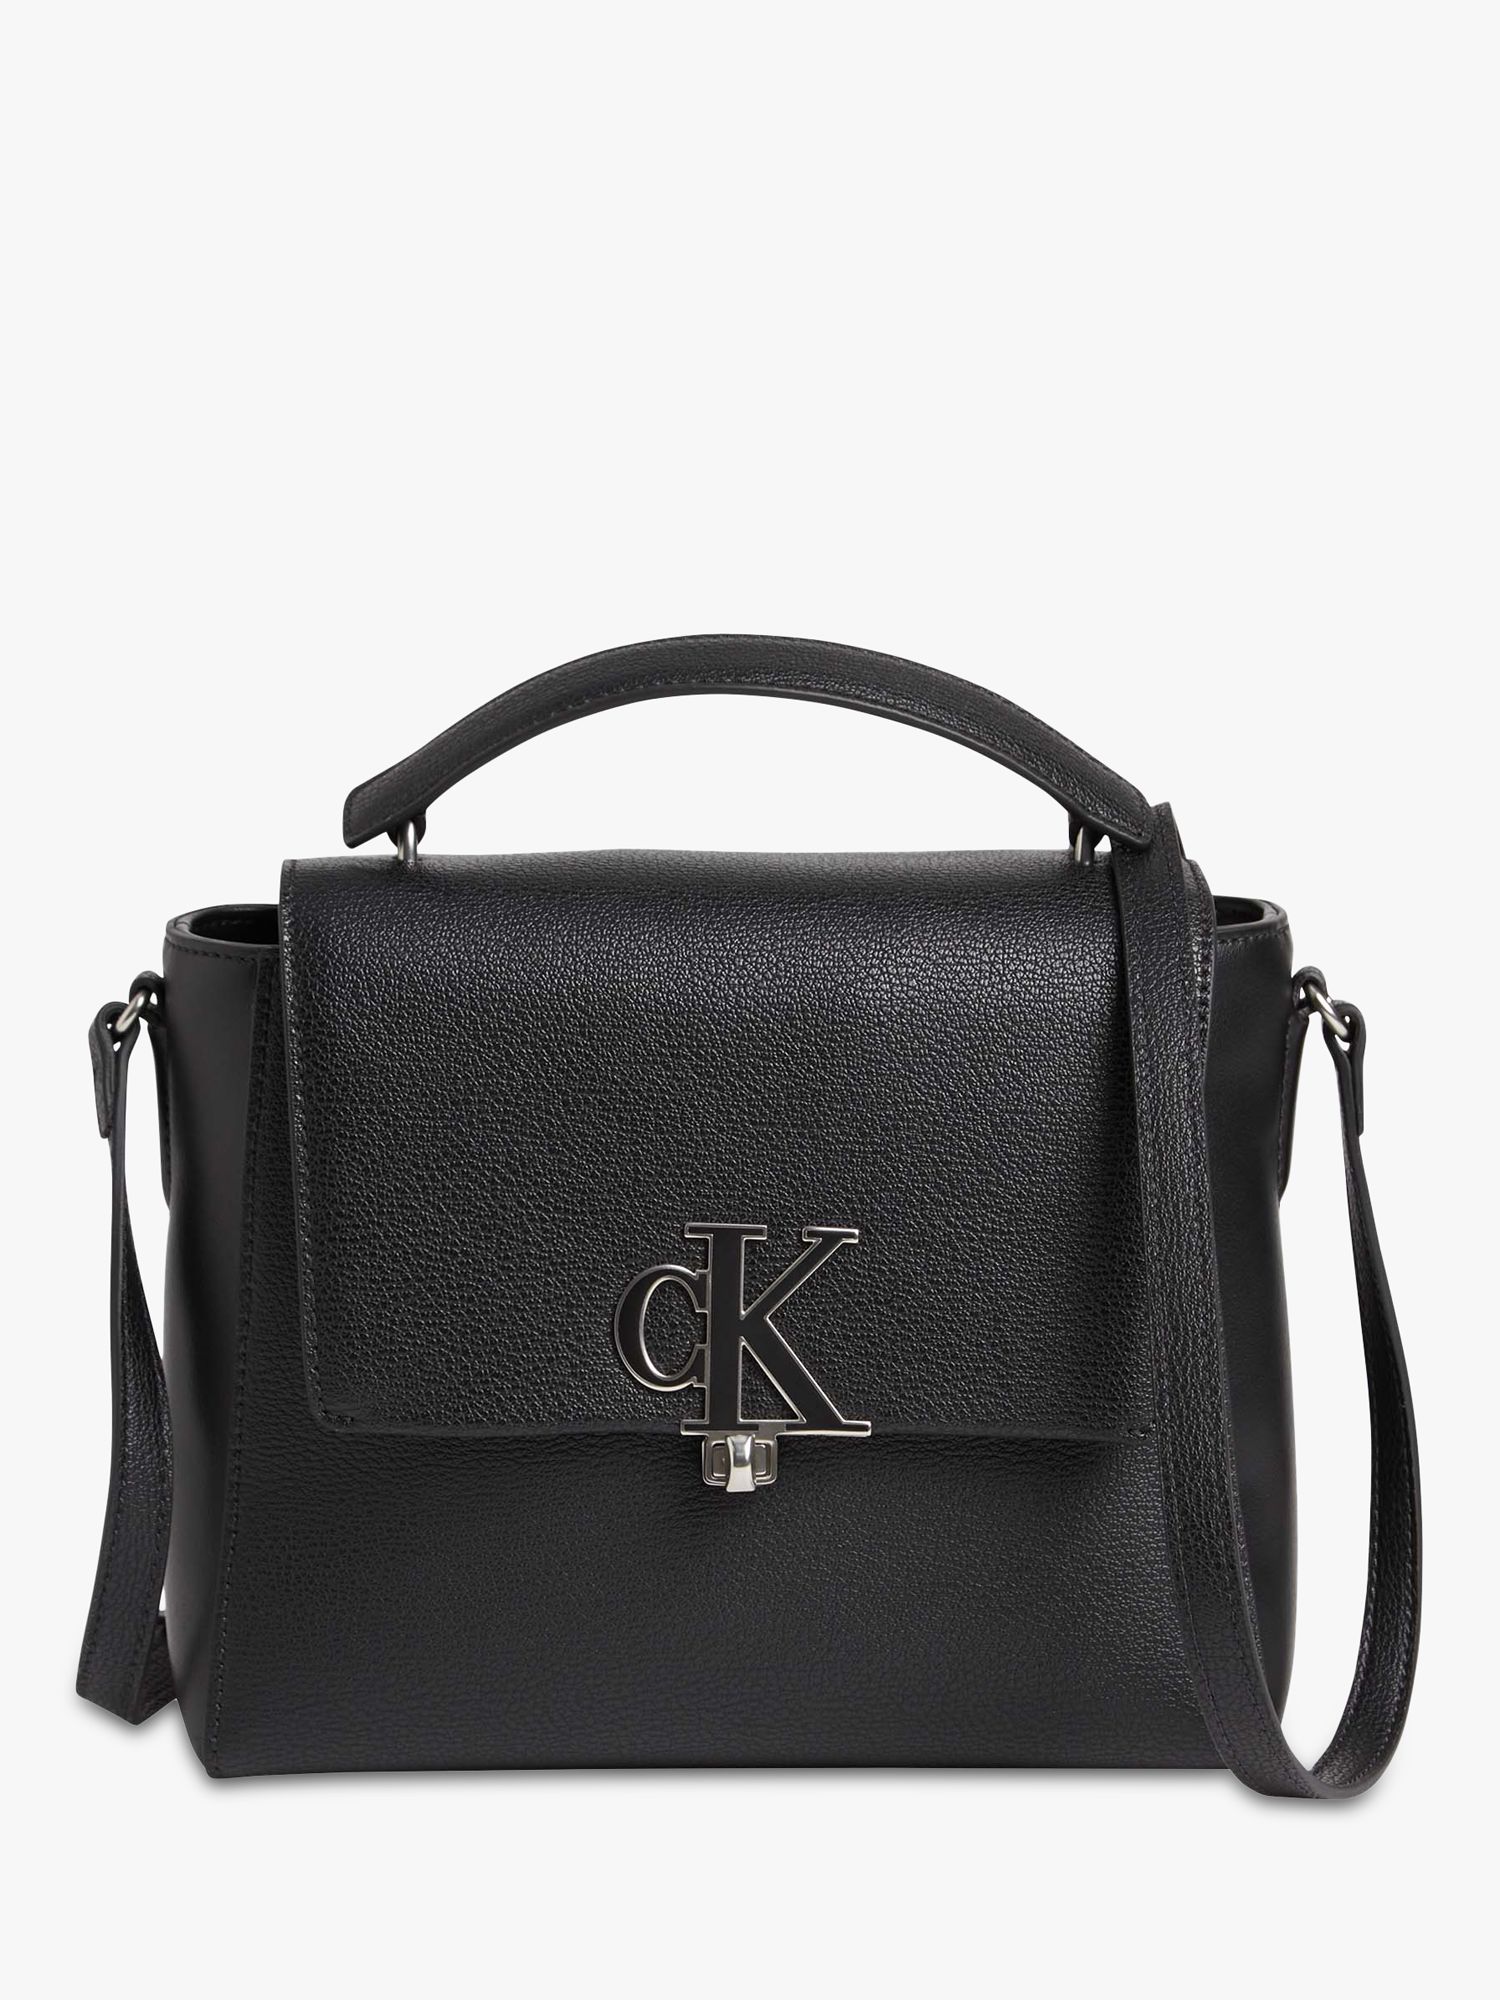 Calvin Klein Minimal Monogram Cross Body Bag, Black